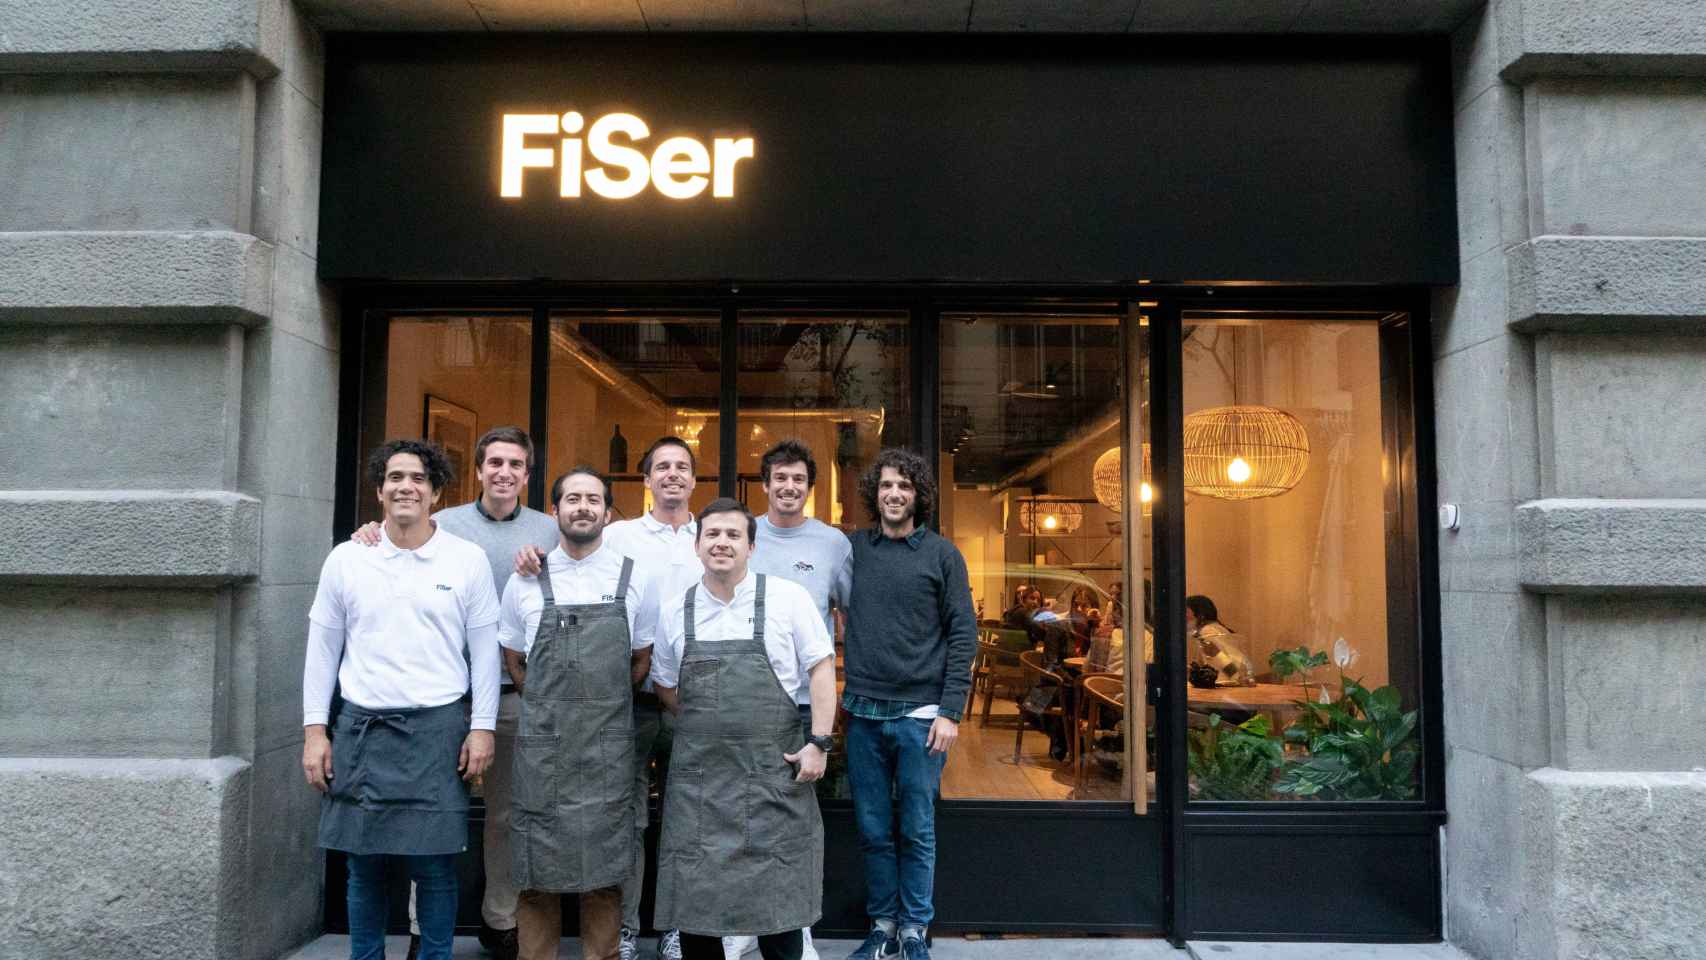 Equipo de FiSer frente al restaurante / MA